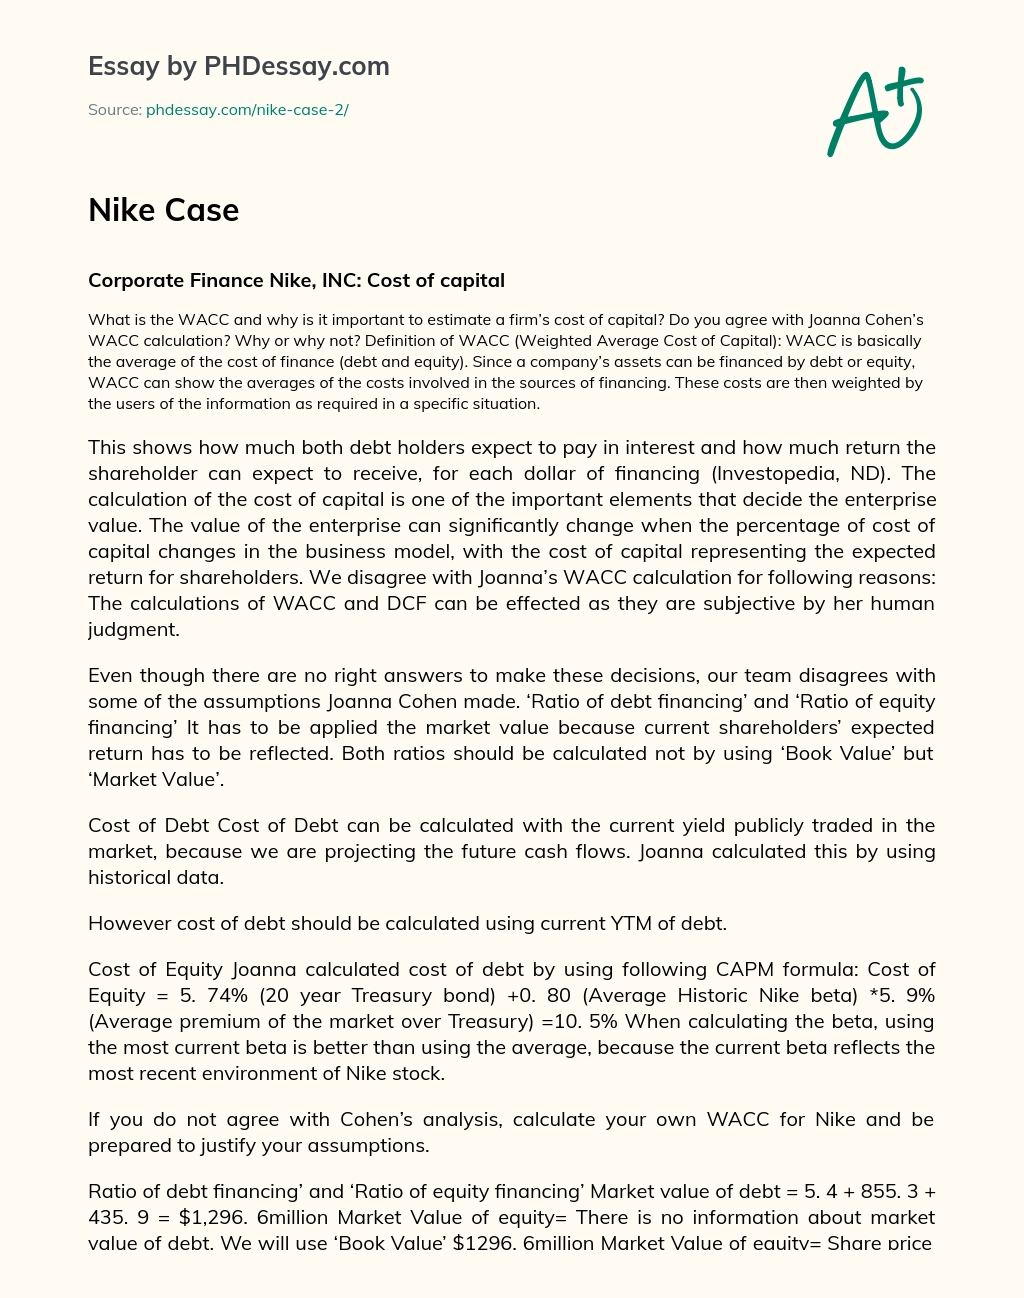 Nike Case essay